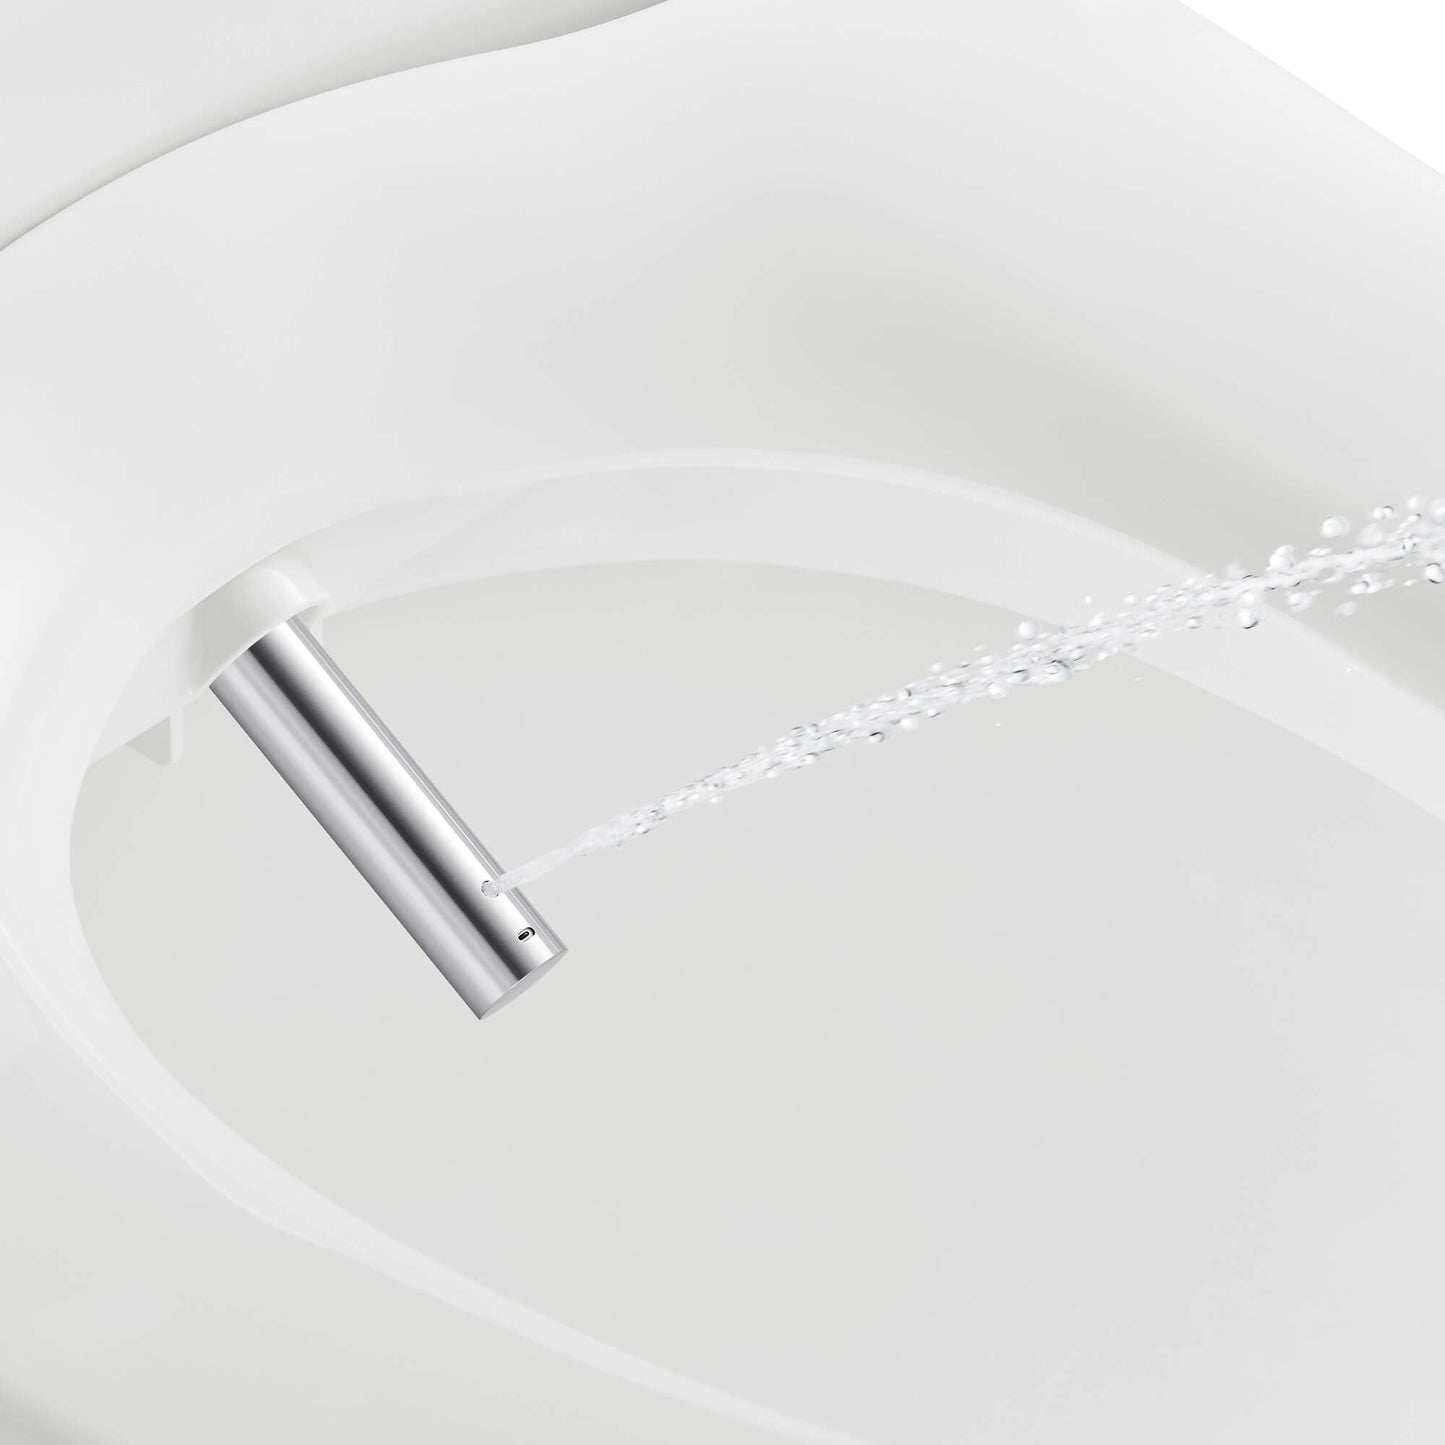 Bio Bidet Slim One Bidet Toilet Seat with Oscillating Self-Cleaning Nozzle, Nightlight, Turbo Wash and Side Panel Controls